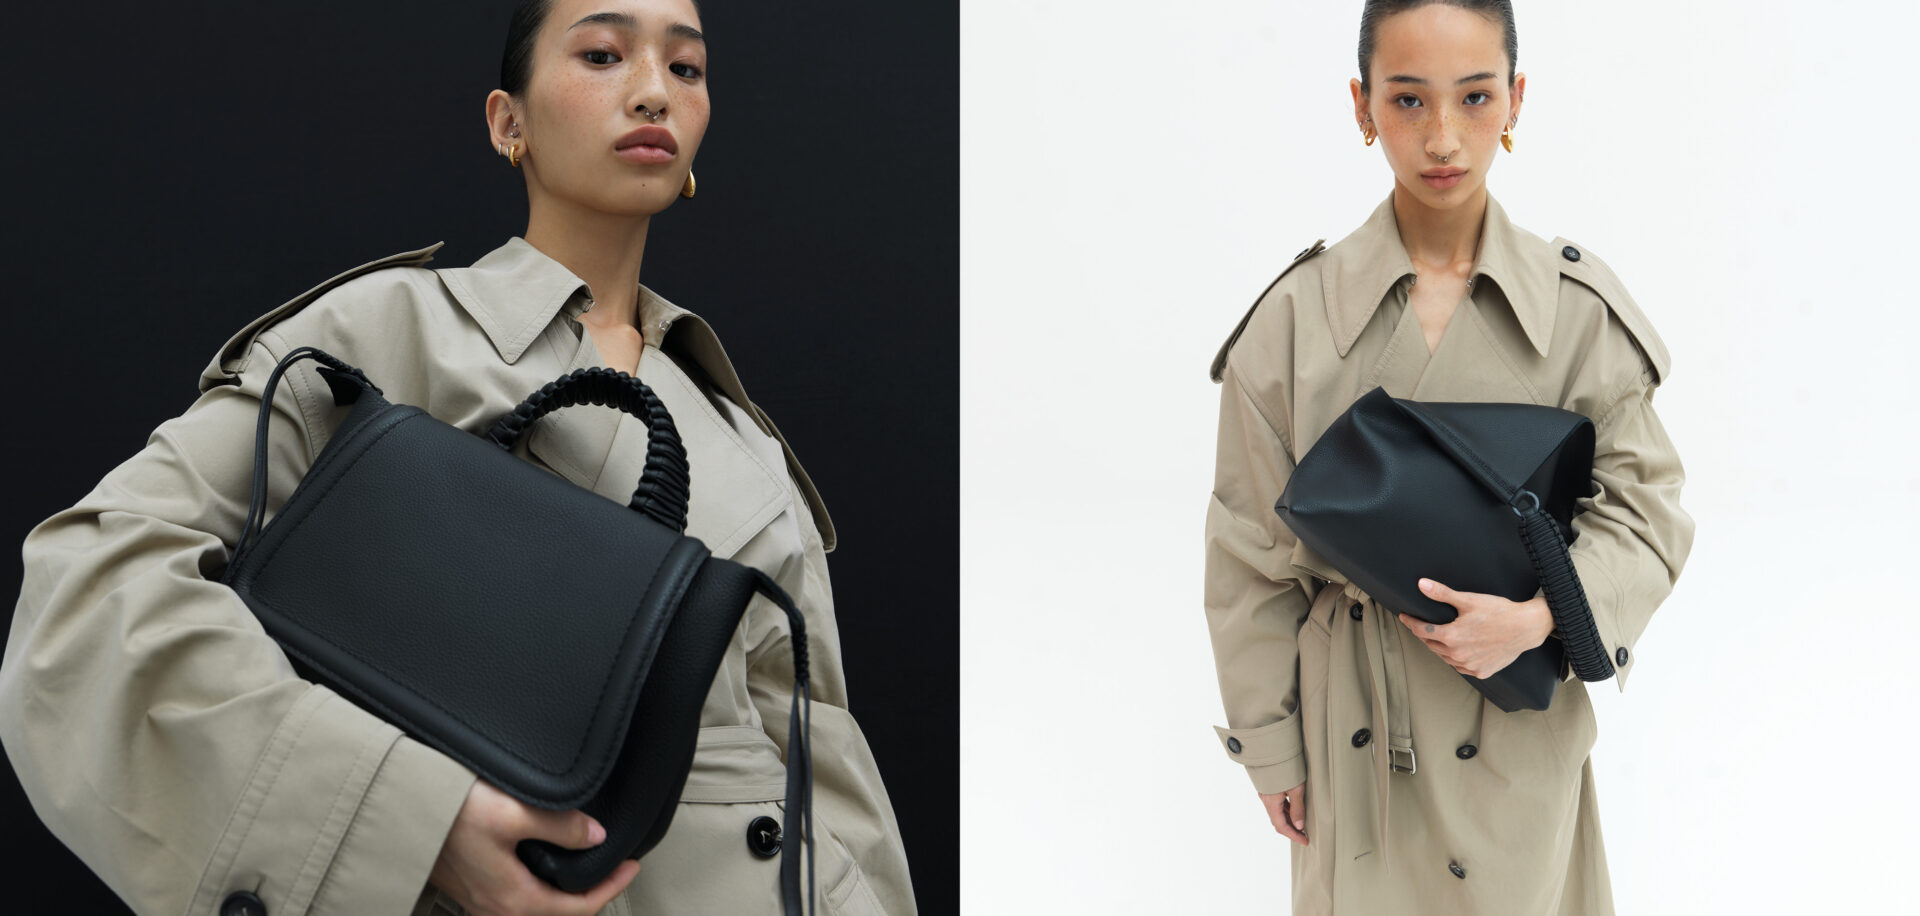 Purses & Bags for Women - Women's Handbags - Callista